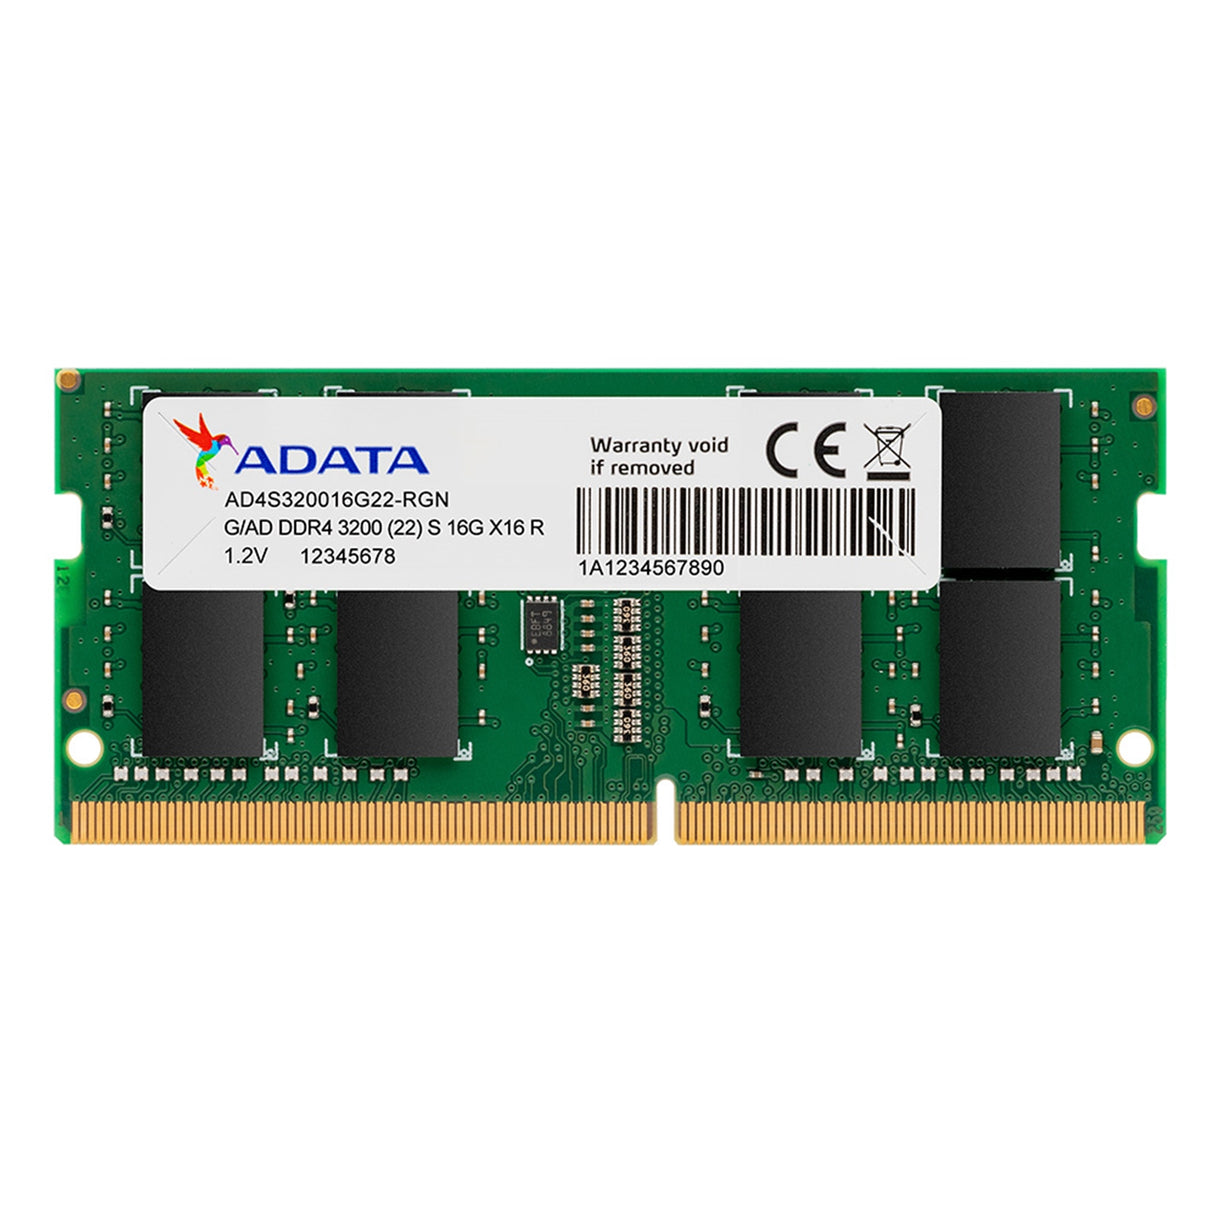 Adata Premier AD4S320016G22-SGN 16GB SODIMM System Memory DDR4, 3200MHz, 1 x 16GB